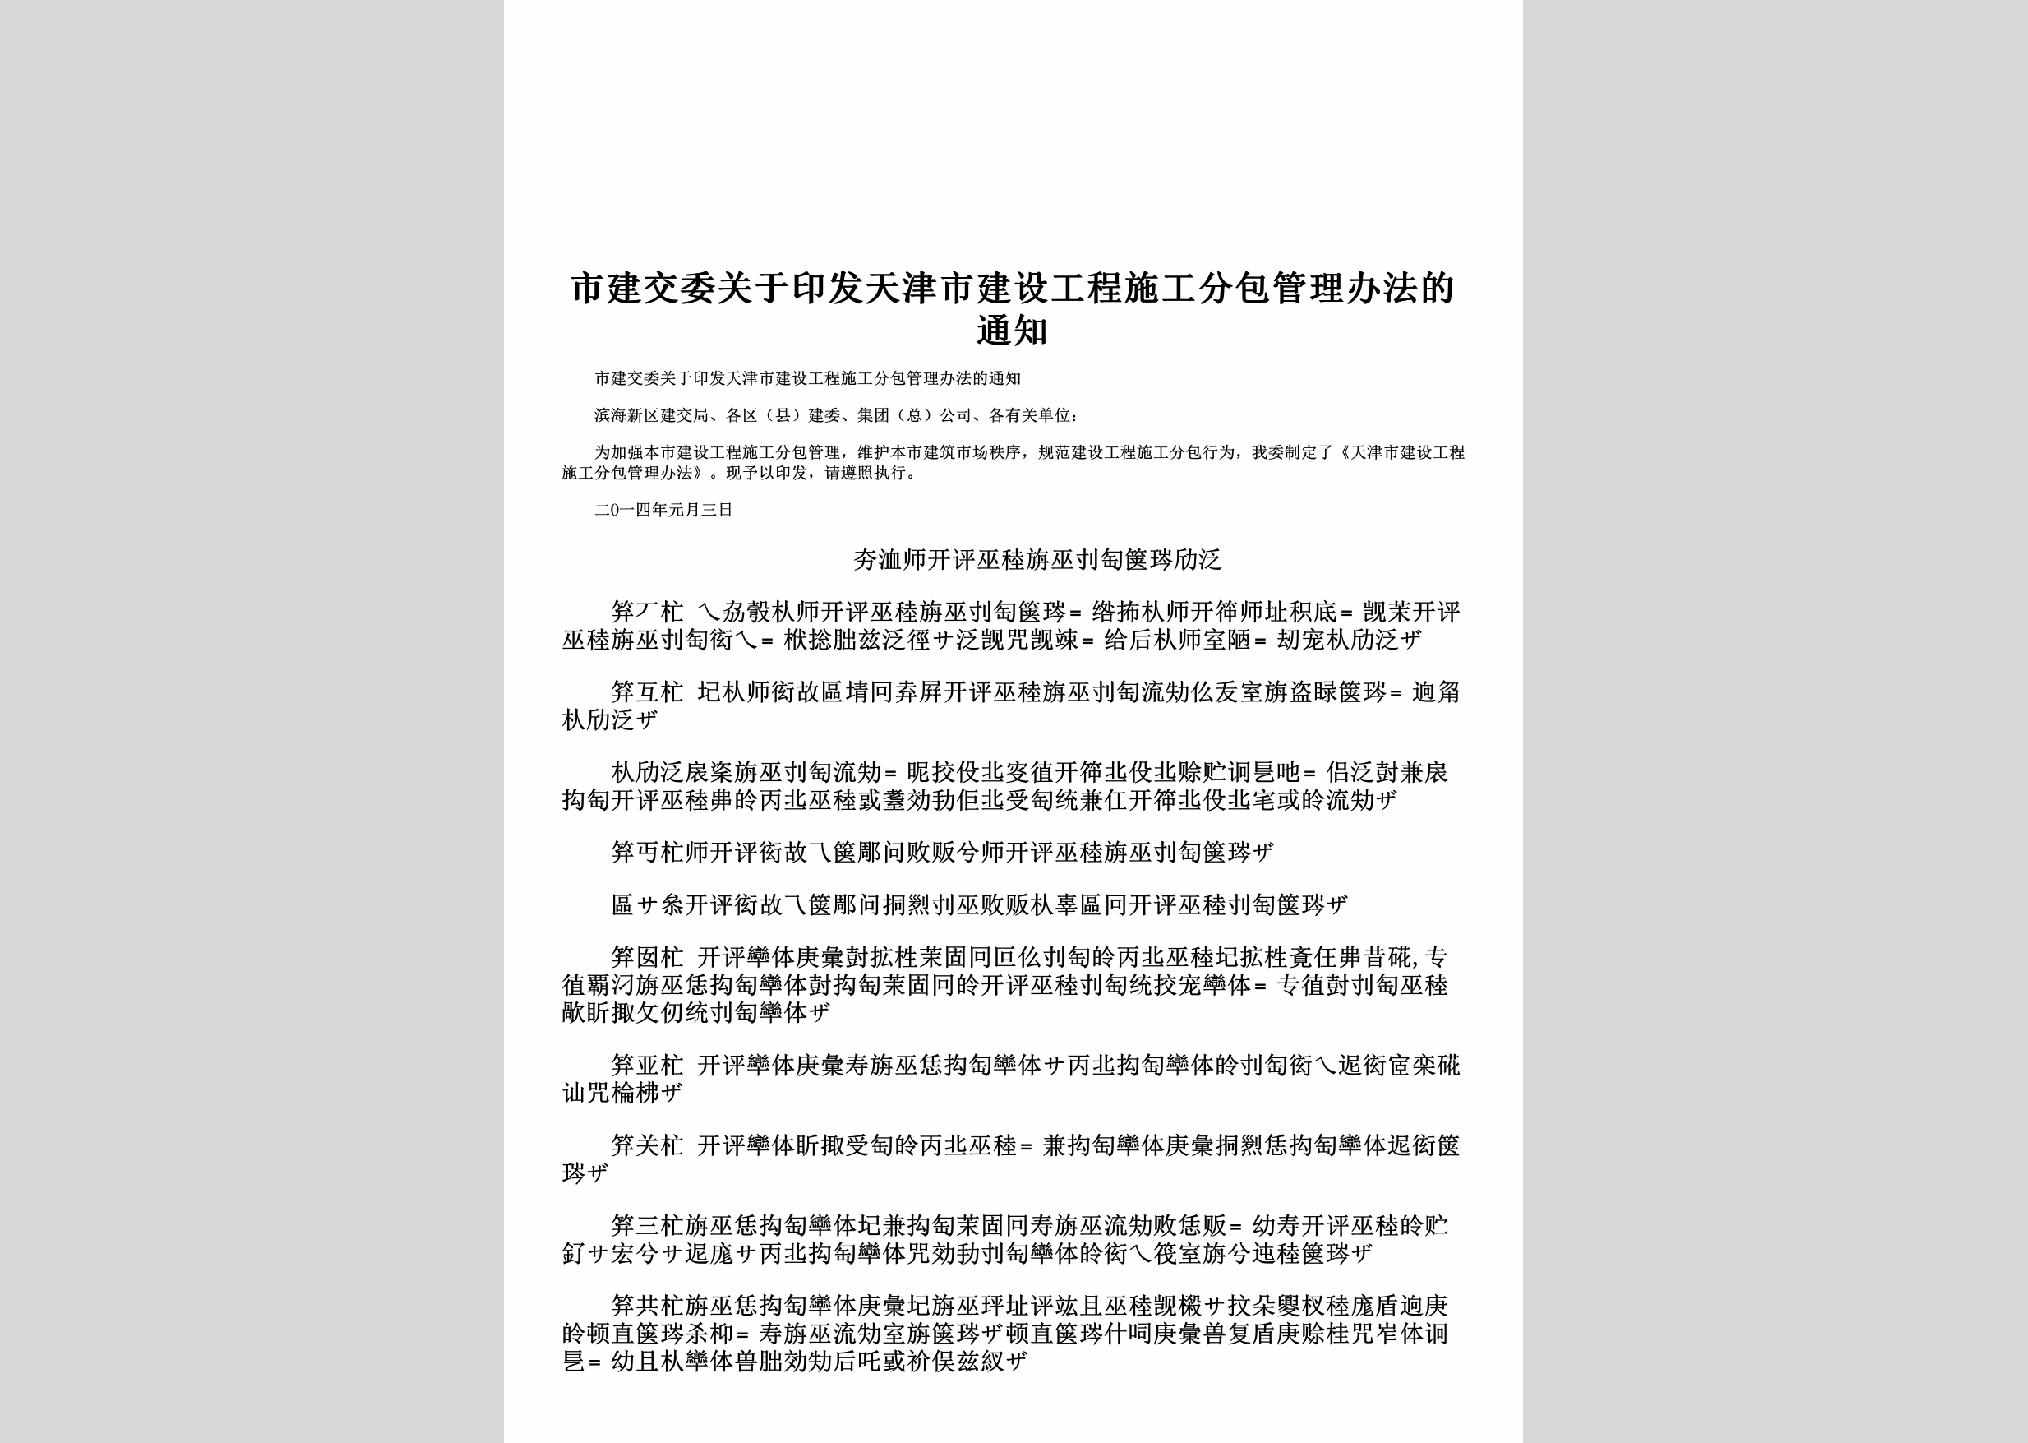 TJ-SJJWGYYF-2014：关于印发天津市建设工程施工分包管理办法的通知